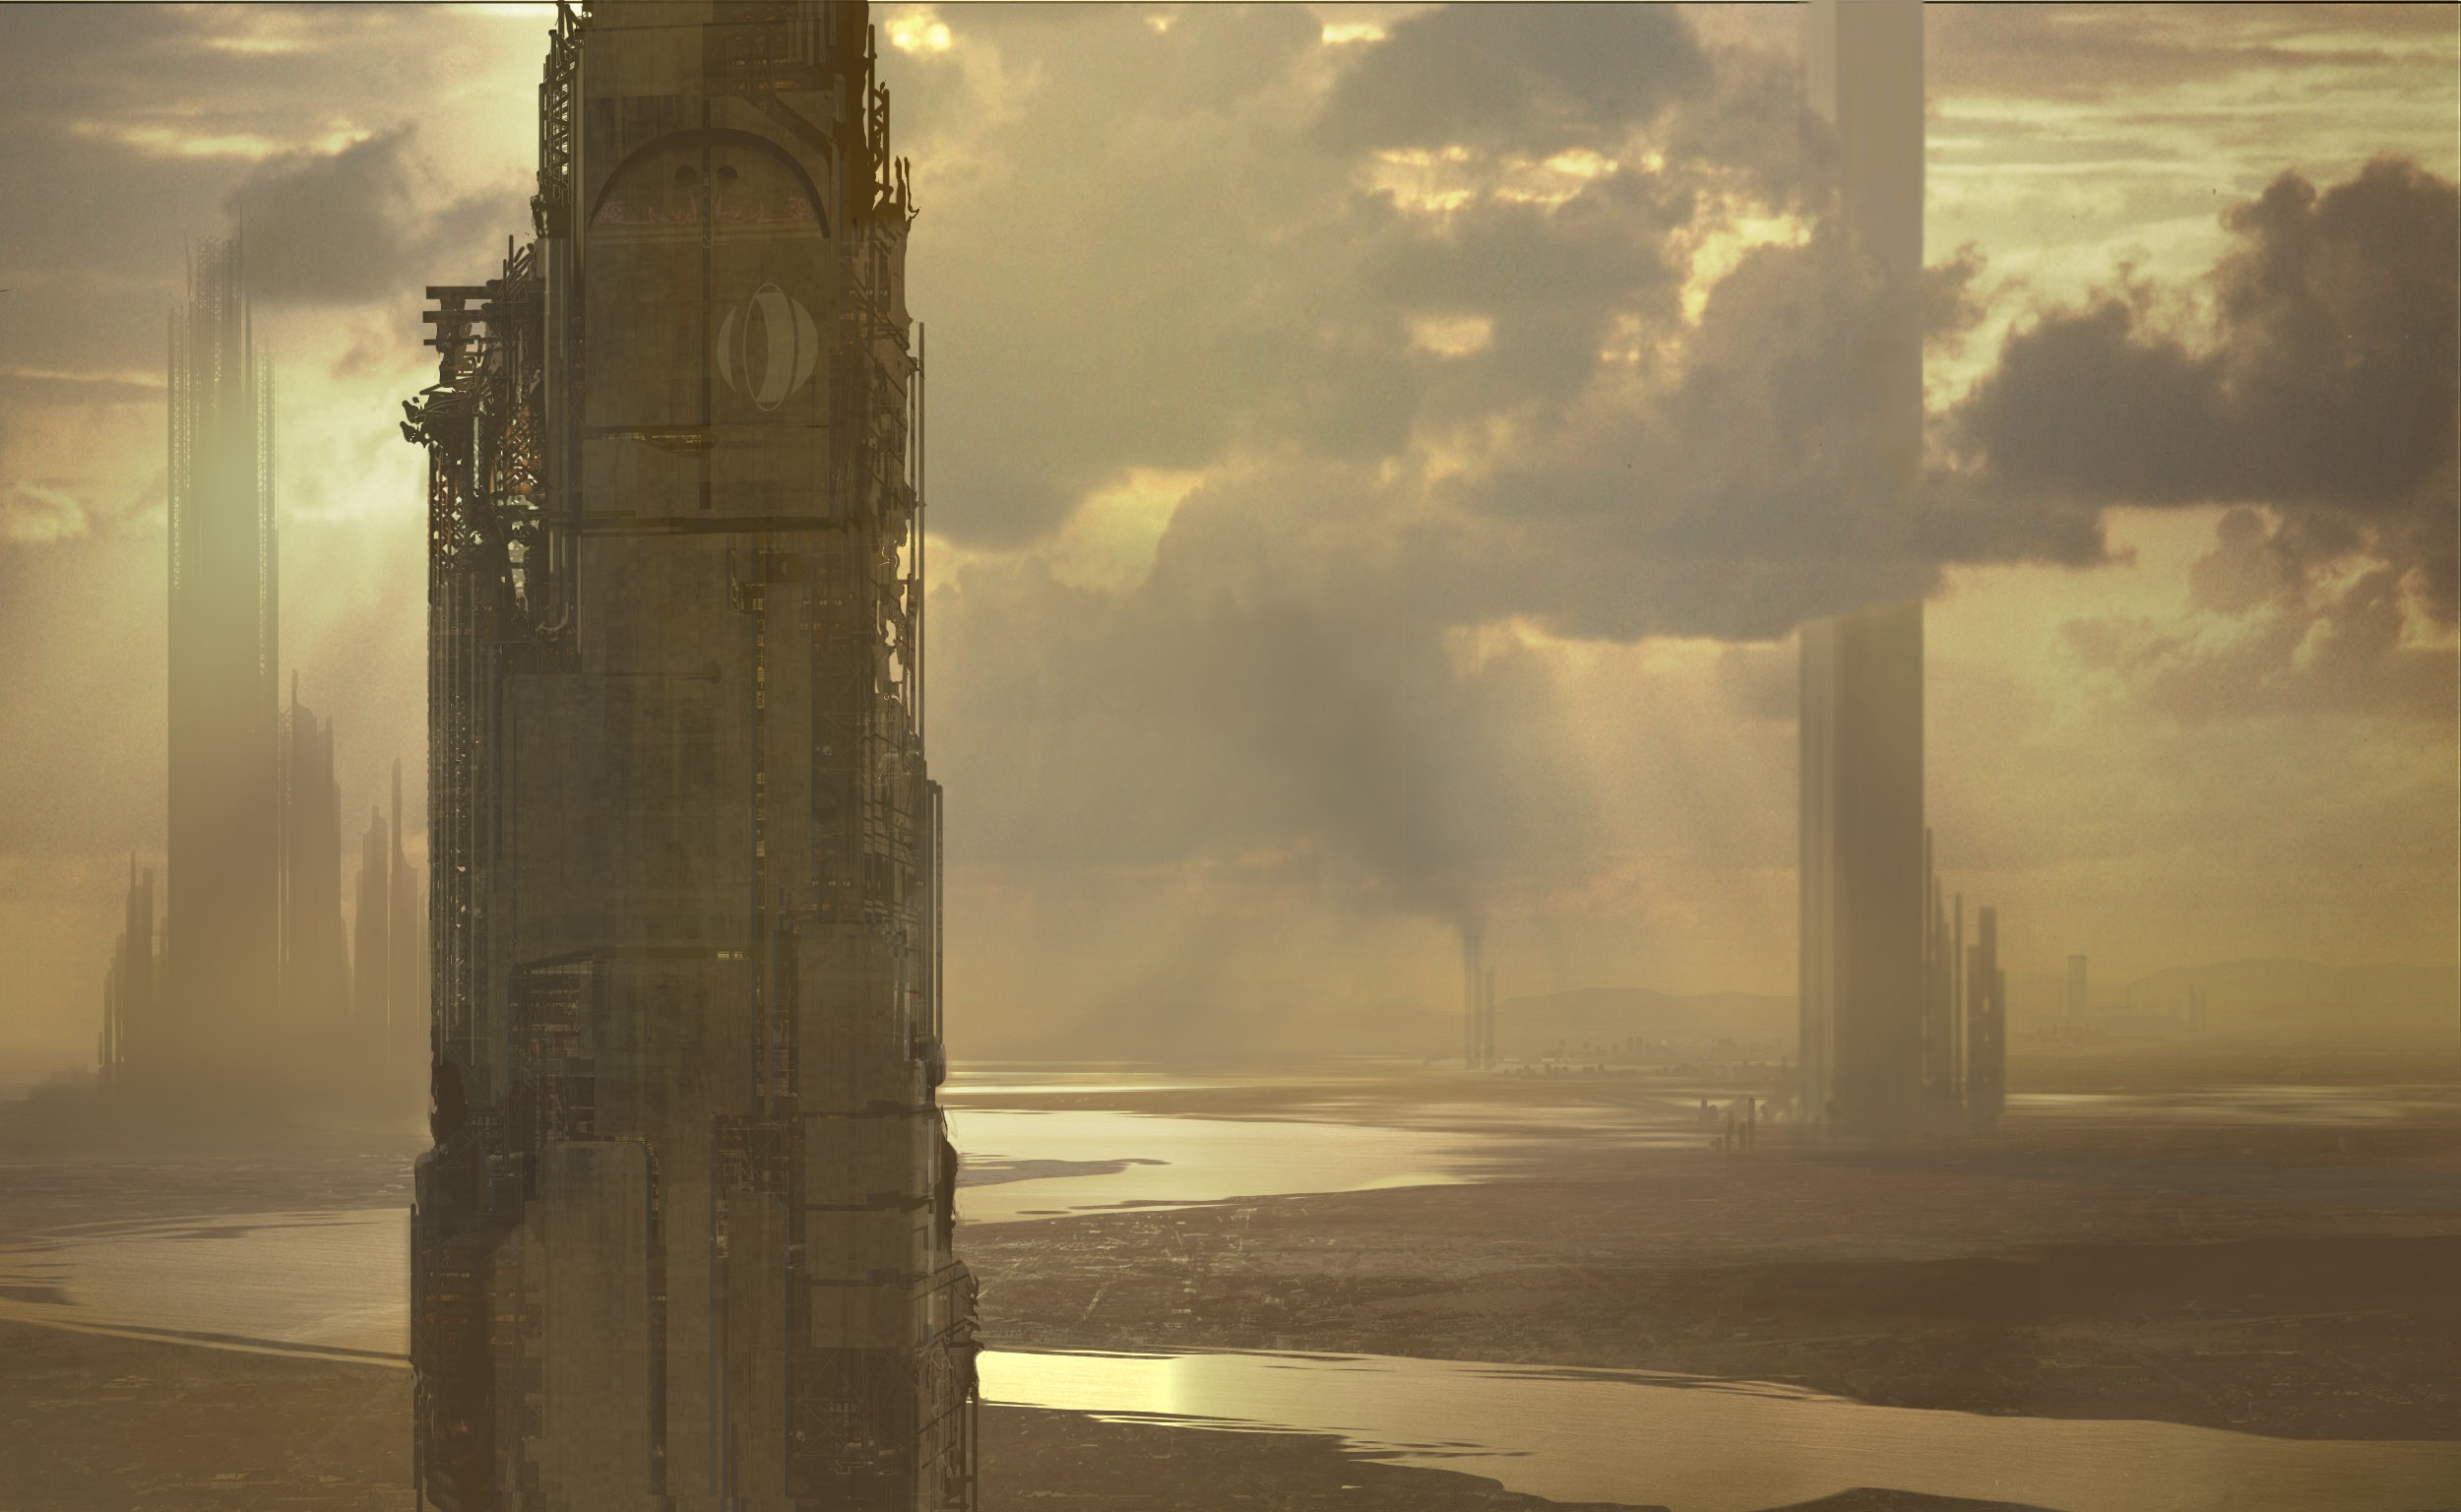 General 2500x1536 science fiction artwork digital art futuristic tower sky clouds Half-Life 2 PC gaming